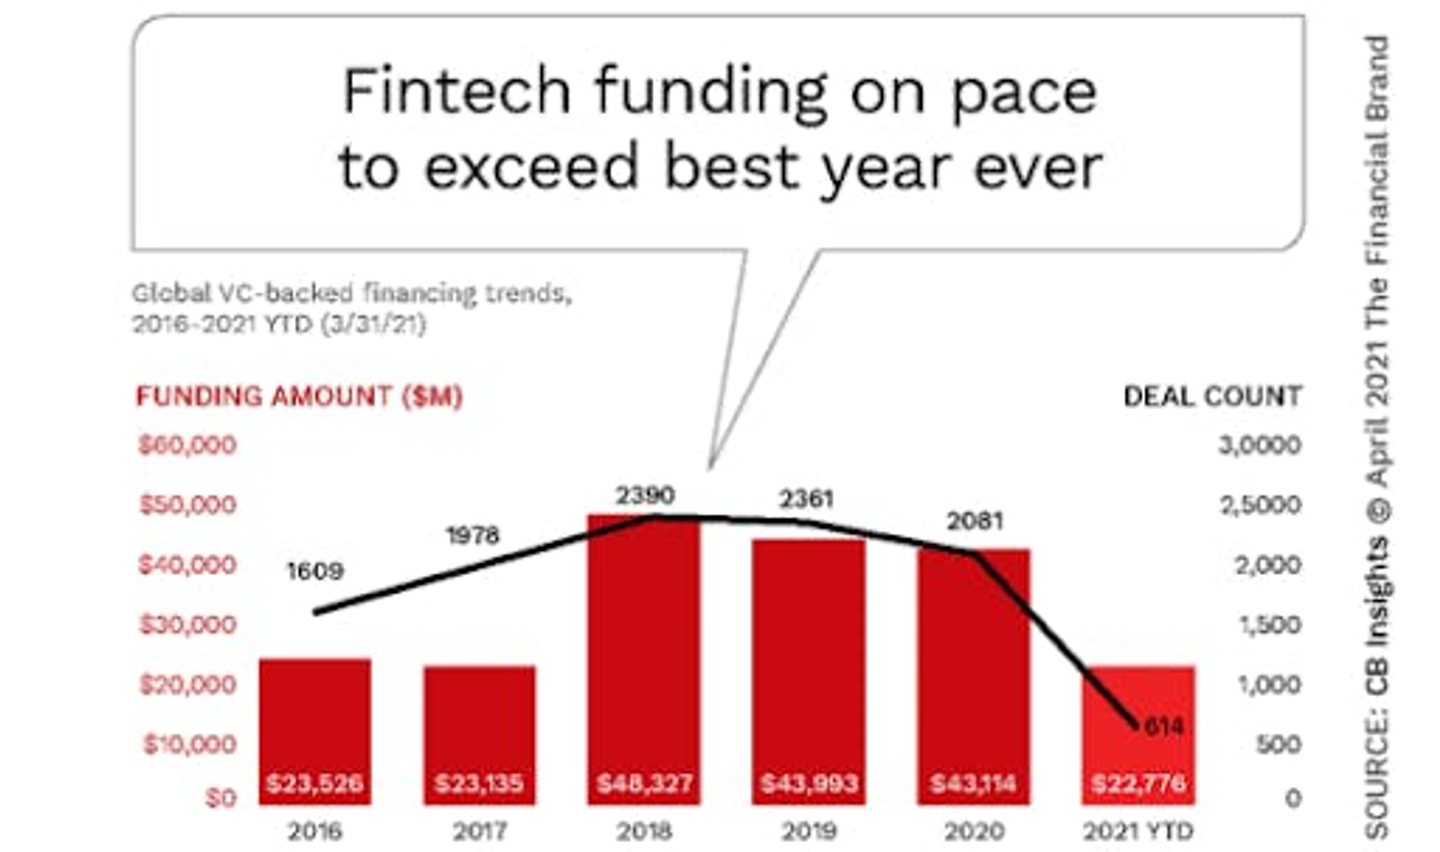 fintech growth in funding